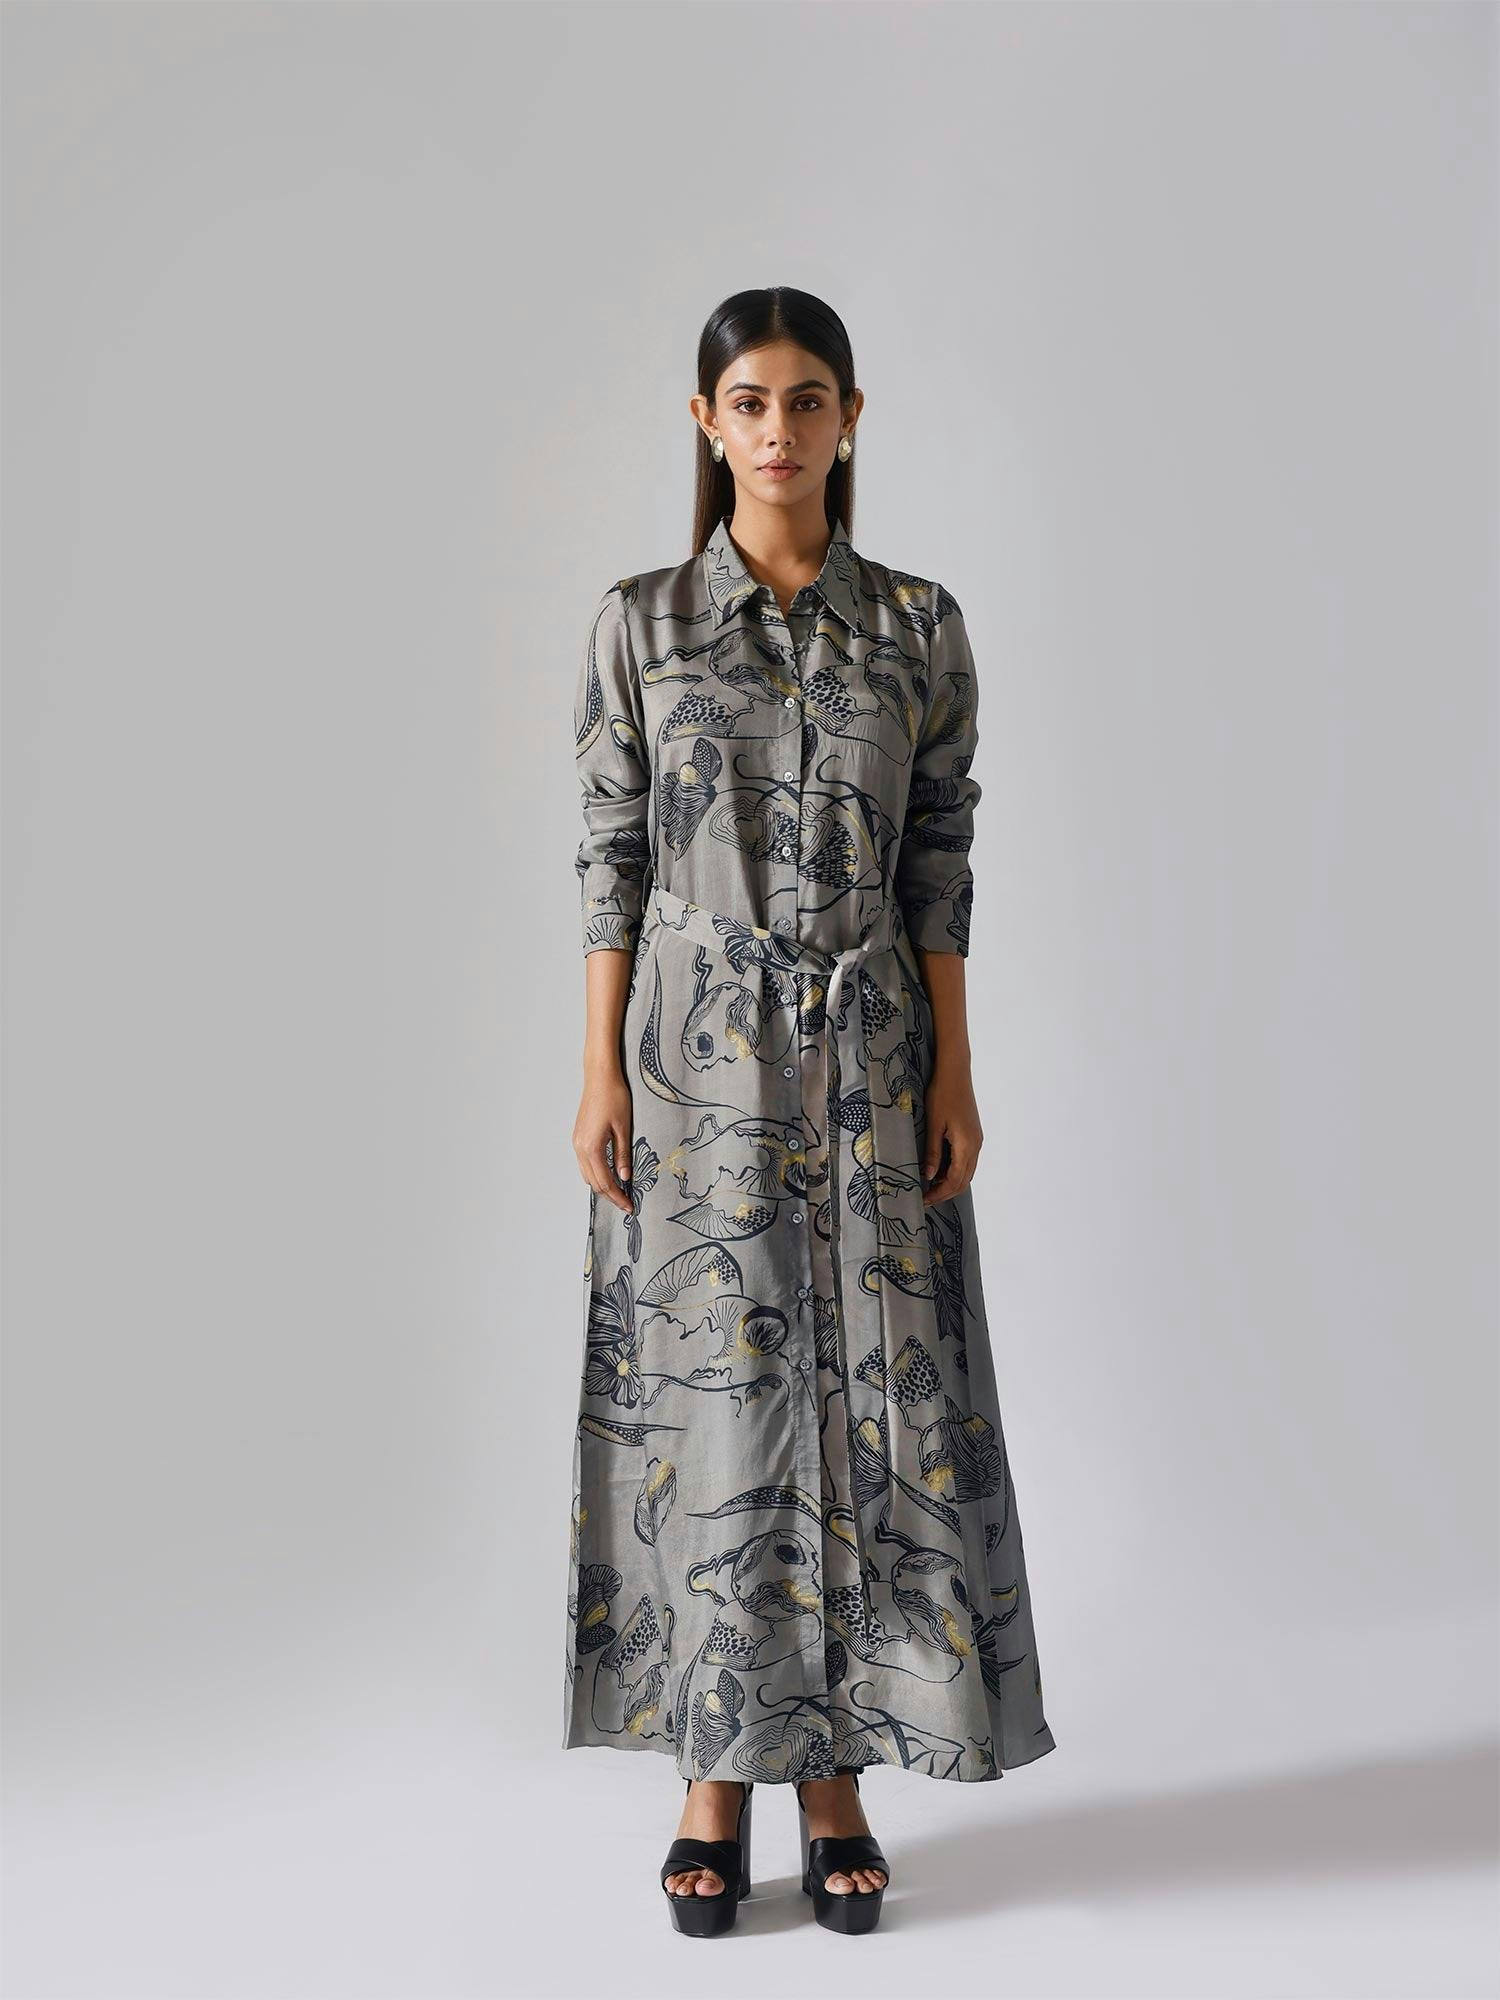 Reflect Grey Dress, a product by KLAD